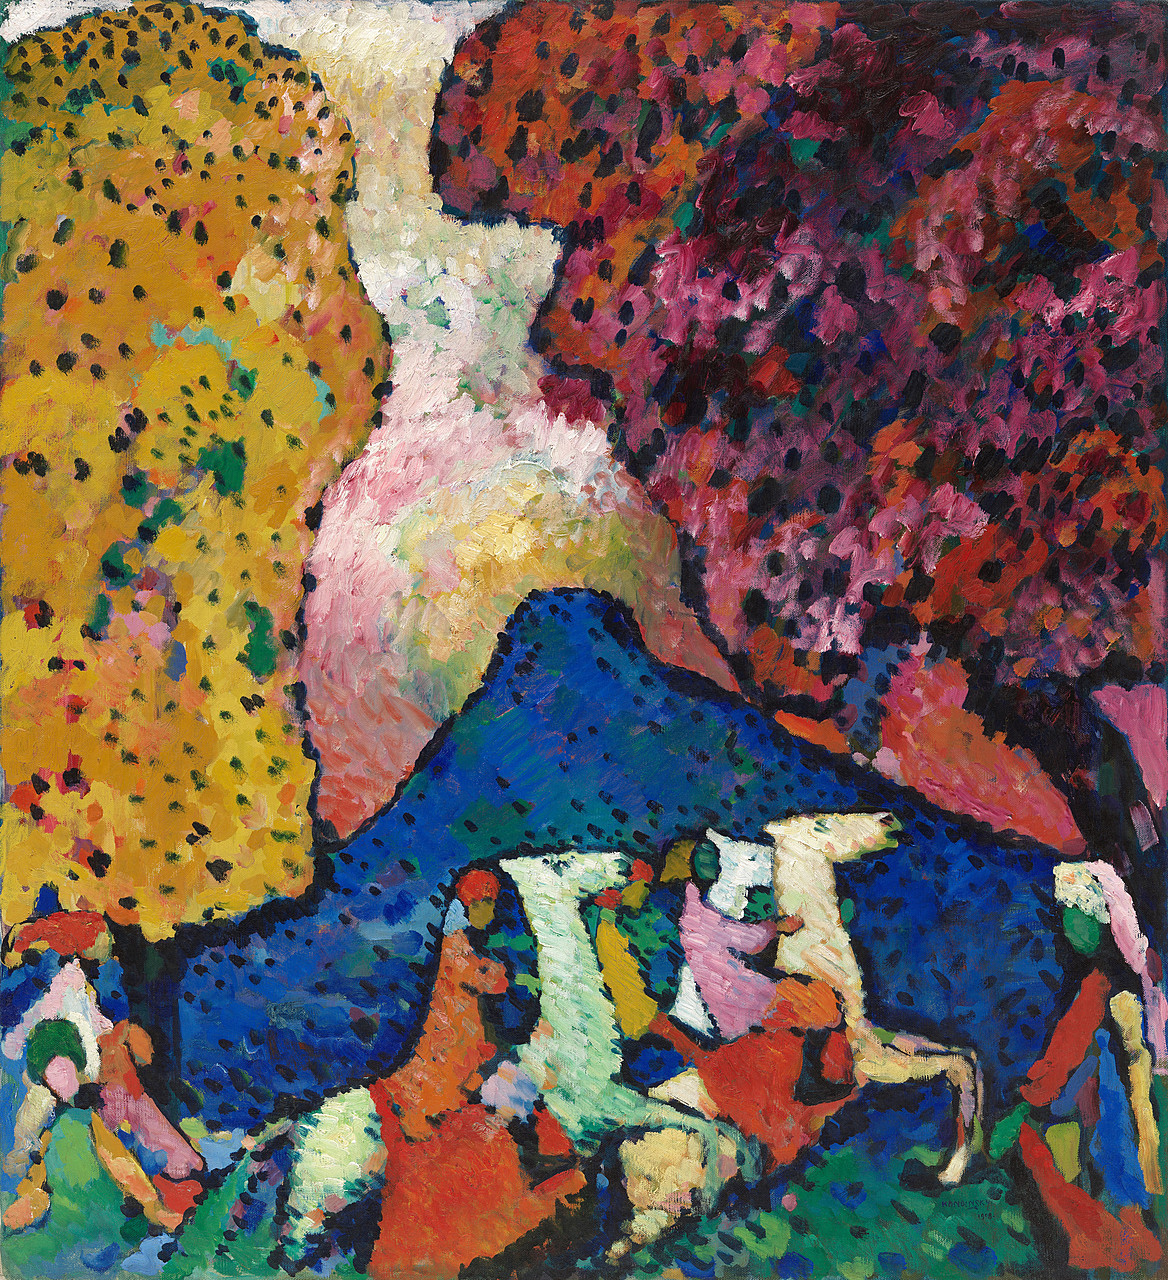 Vasily Kandinsky Museums Blue | The Mountain | Guggenheim and Foundation